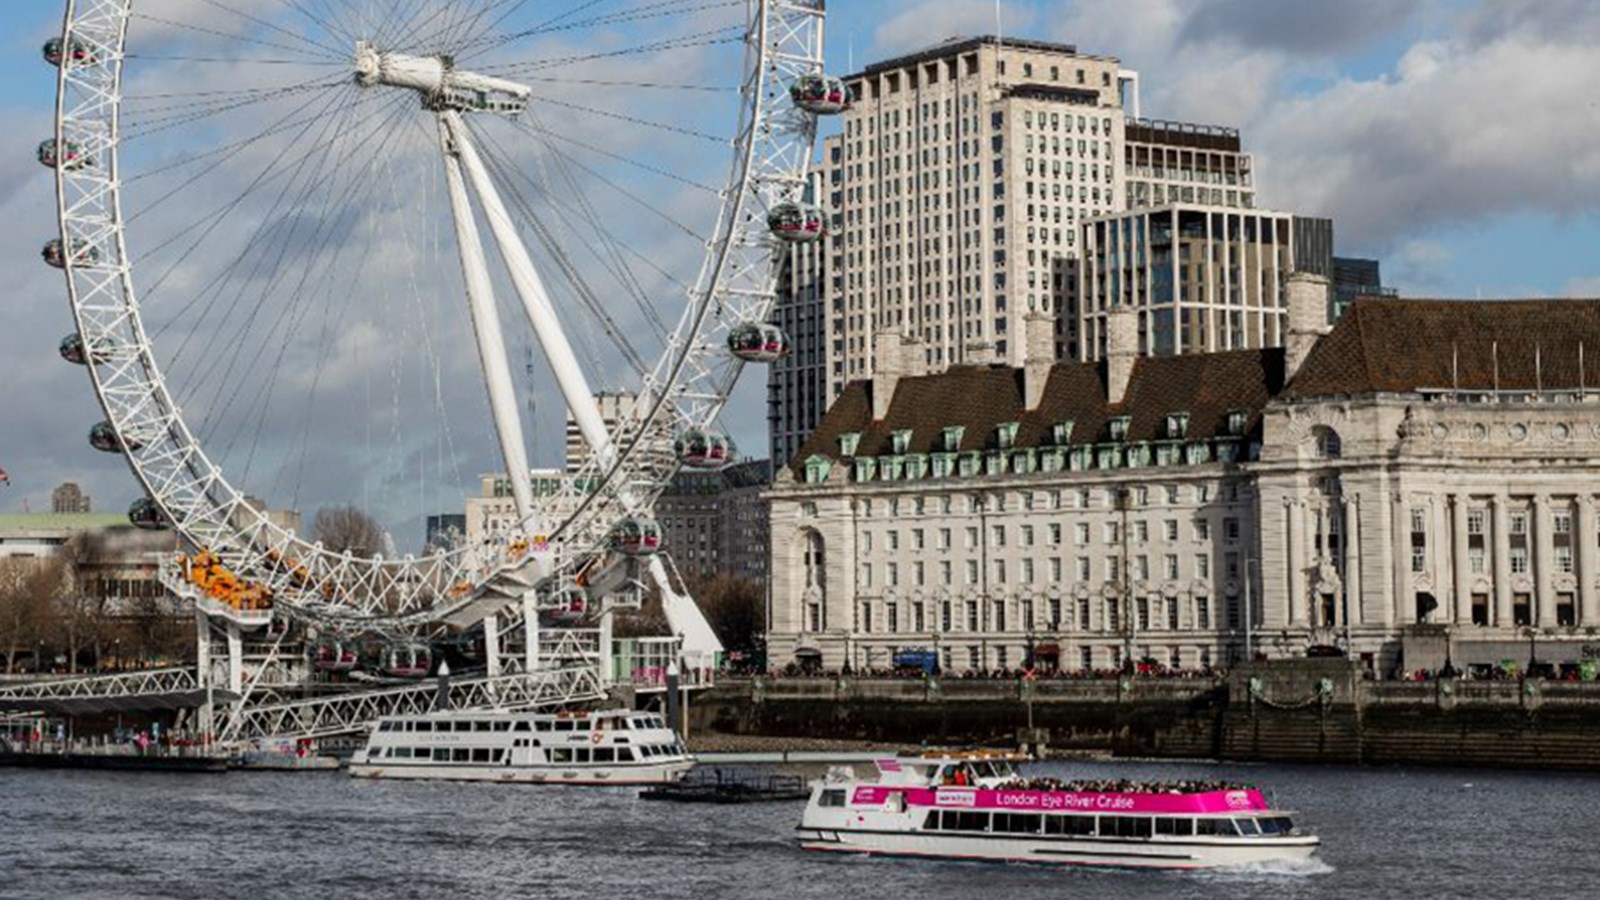 london eye river cruise stops